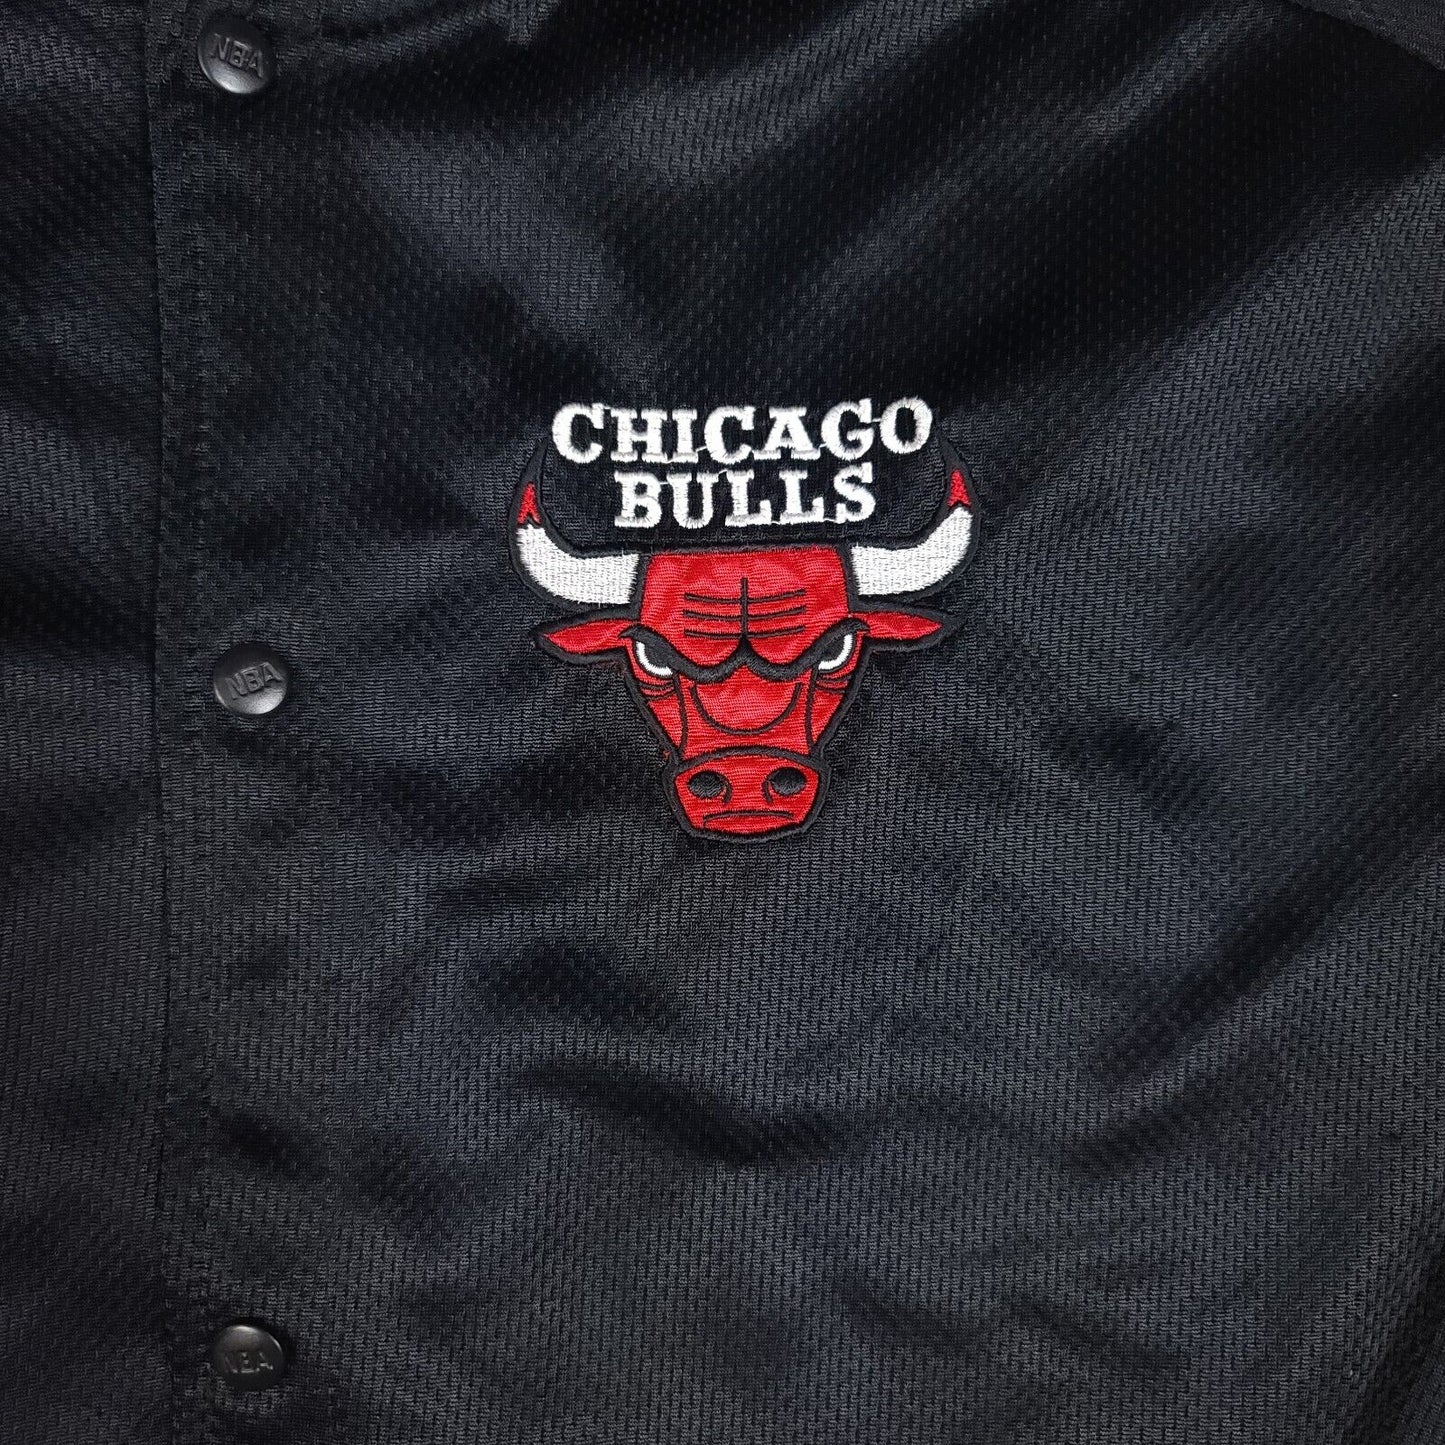 Nba Chicago Bulls Pro Player Warm-Up Basketball Jacket